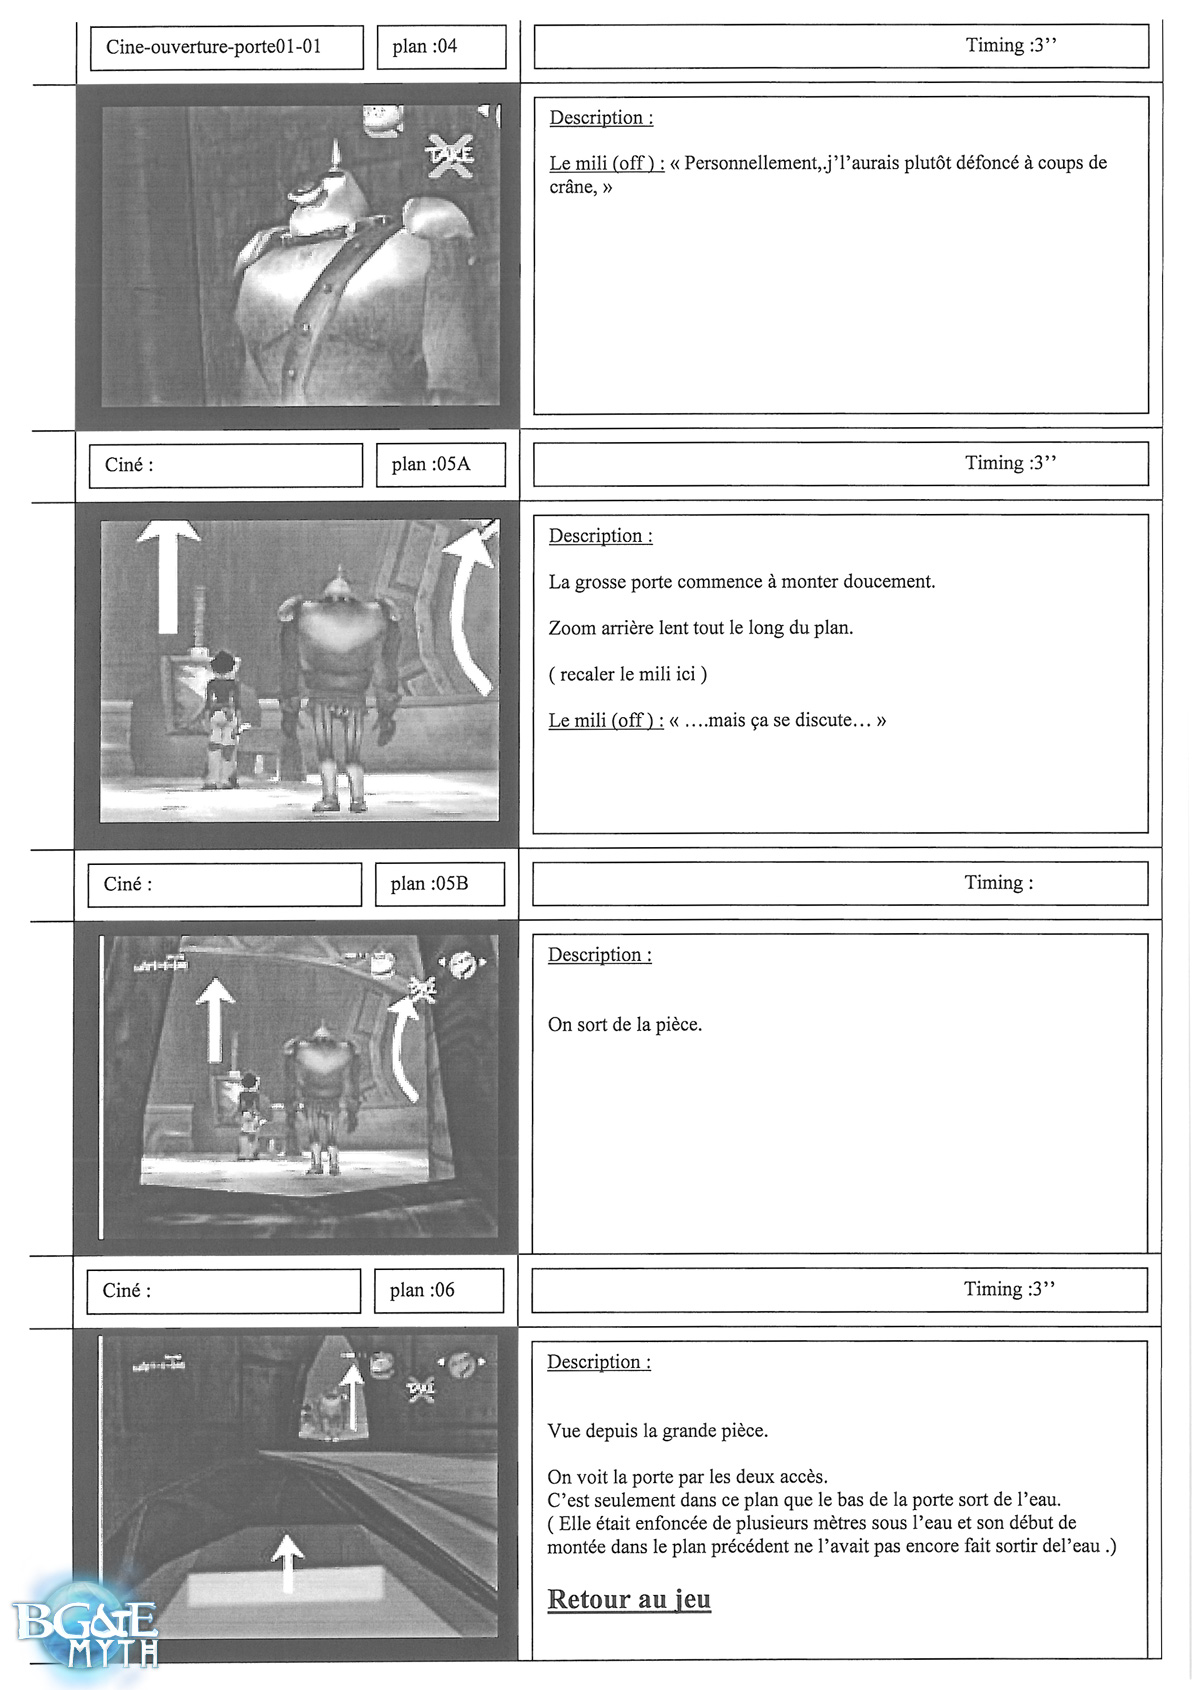 [Storyboard] Cine-ouverture-porte01-01 - Page 2